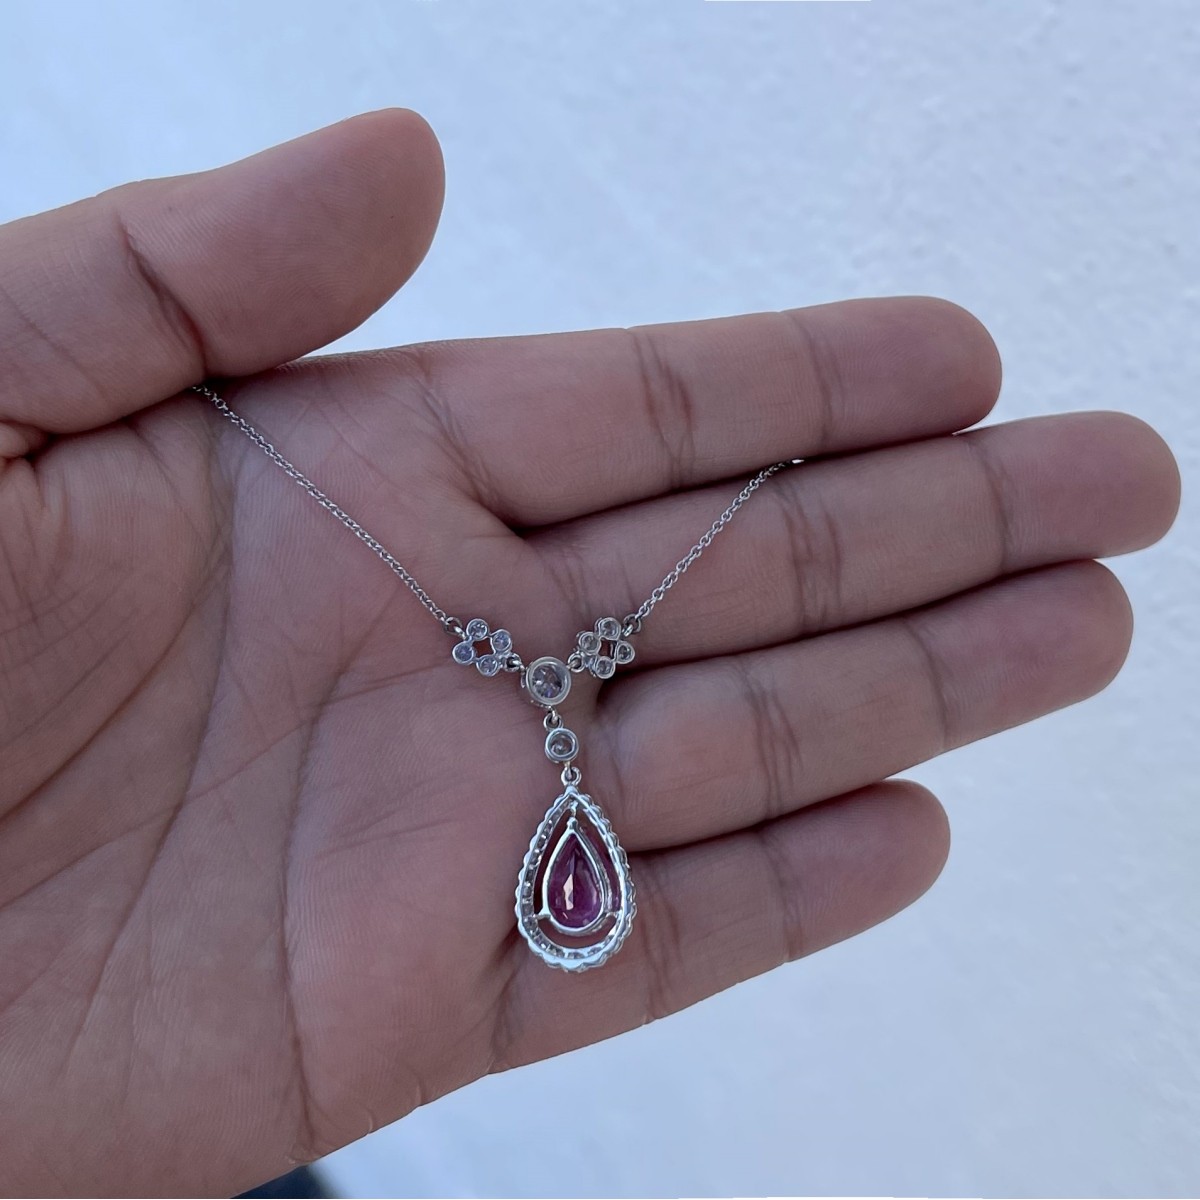 Sapphire, Diamond and 14K Necklace